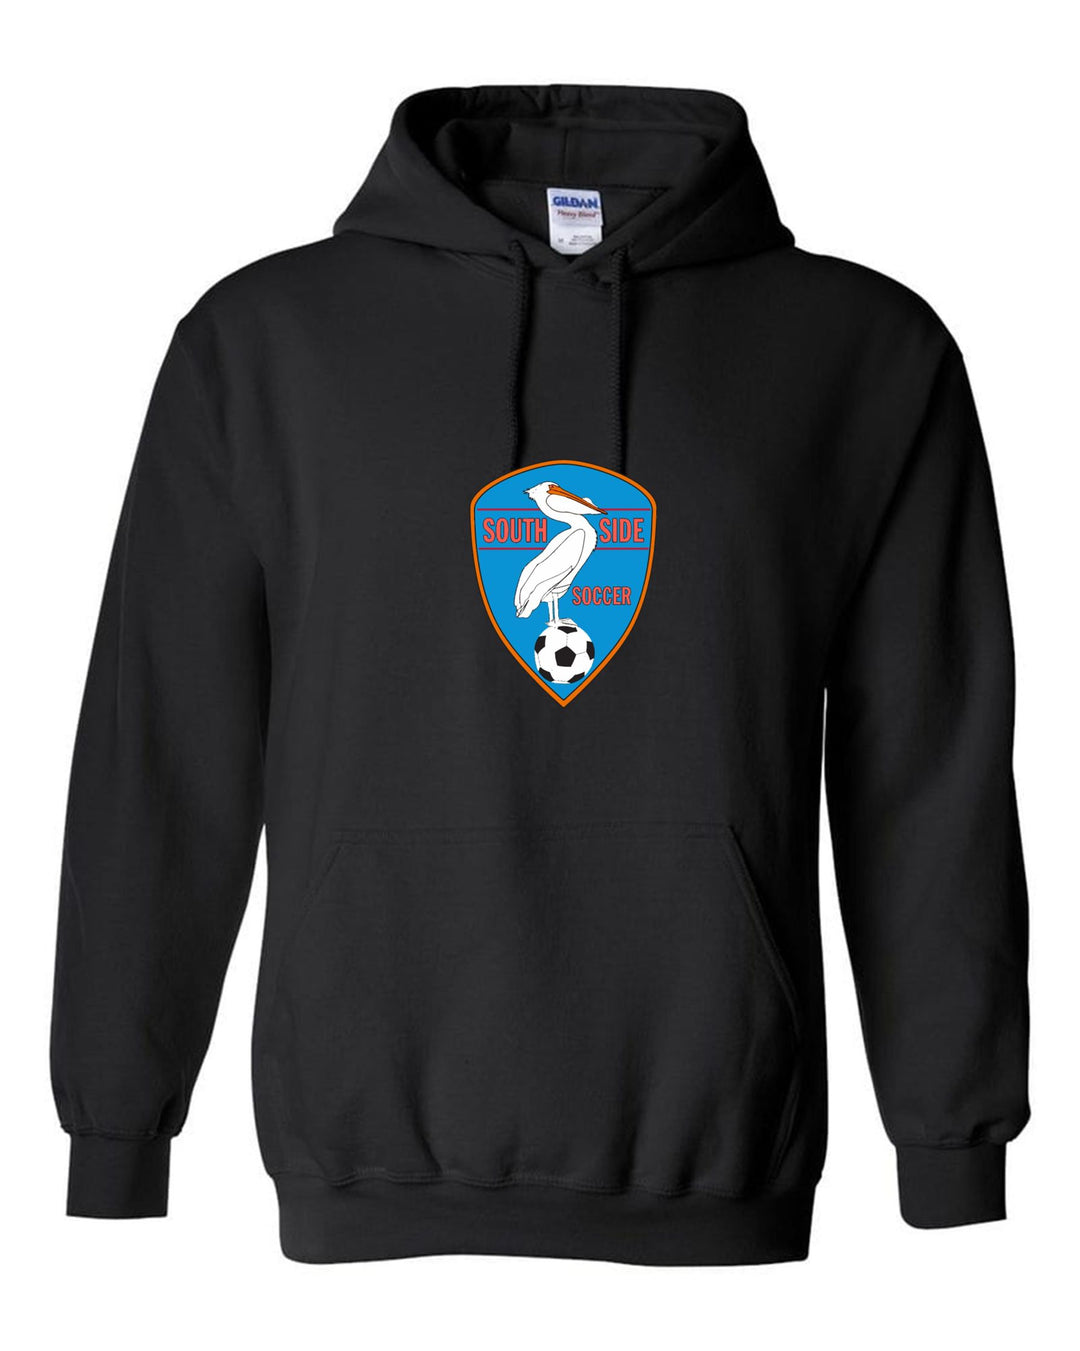 Southside Hooded Sweatshirt - Black, Grey or Orange SYS Spiritwear BLACK MENS MEDIUM - Third Coast Soccer